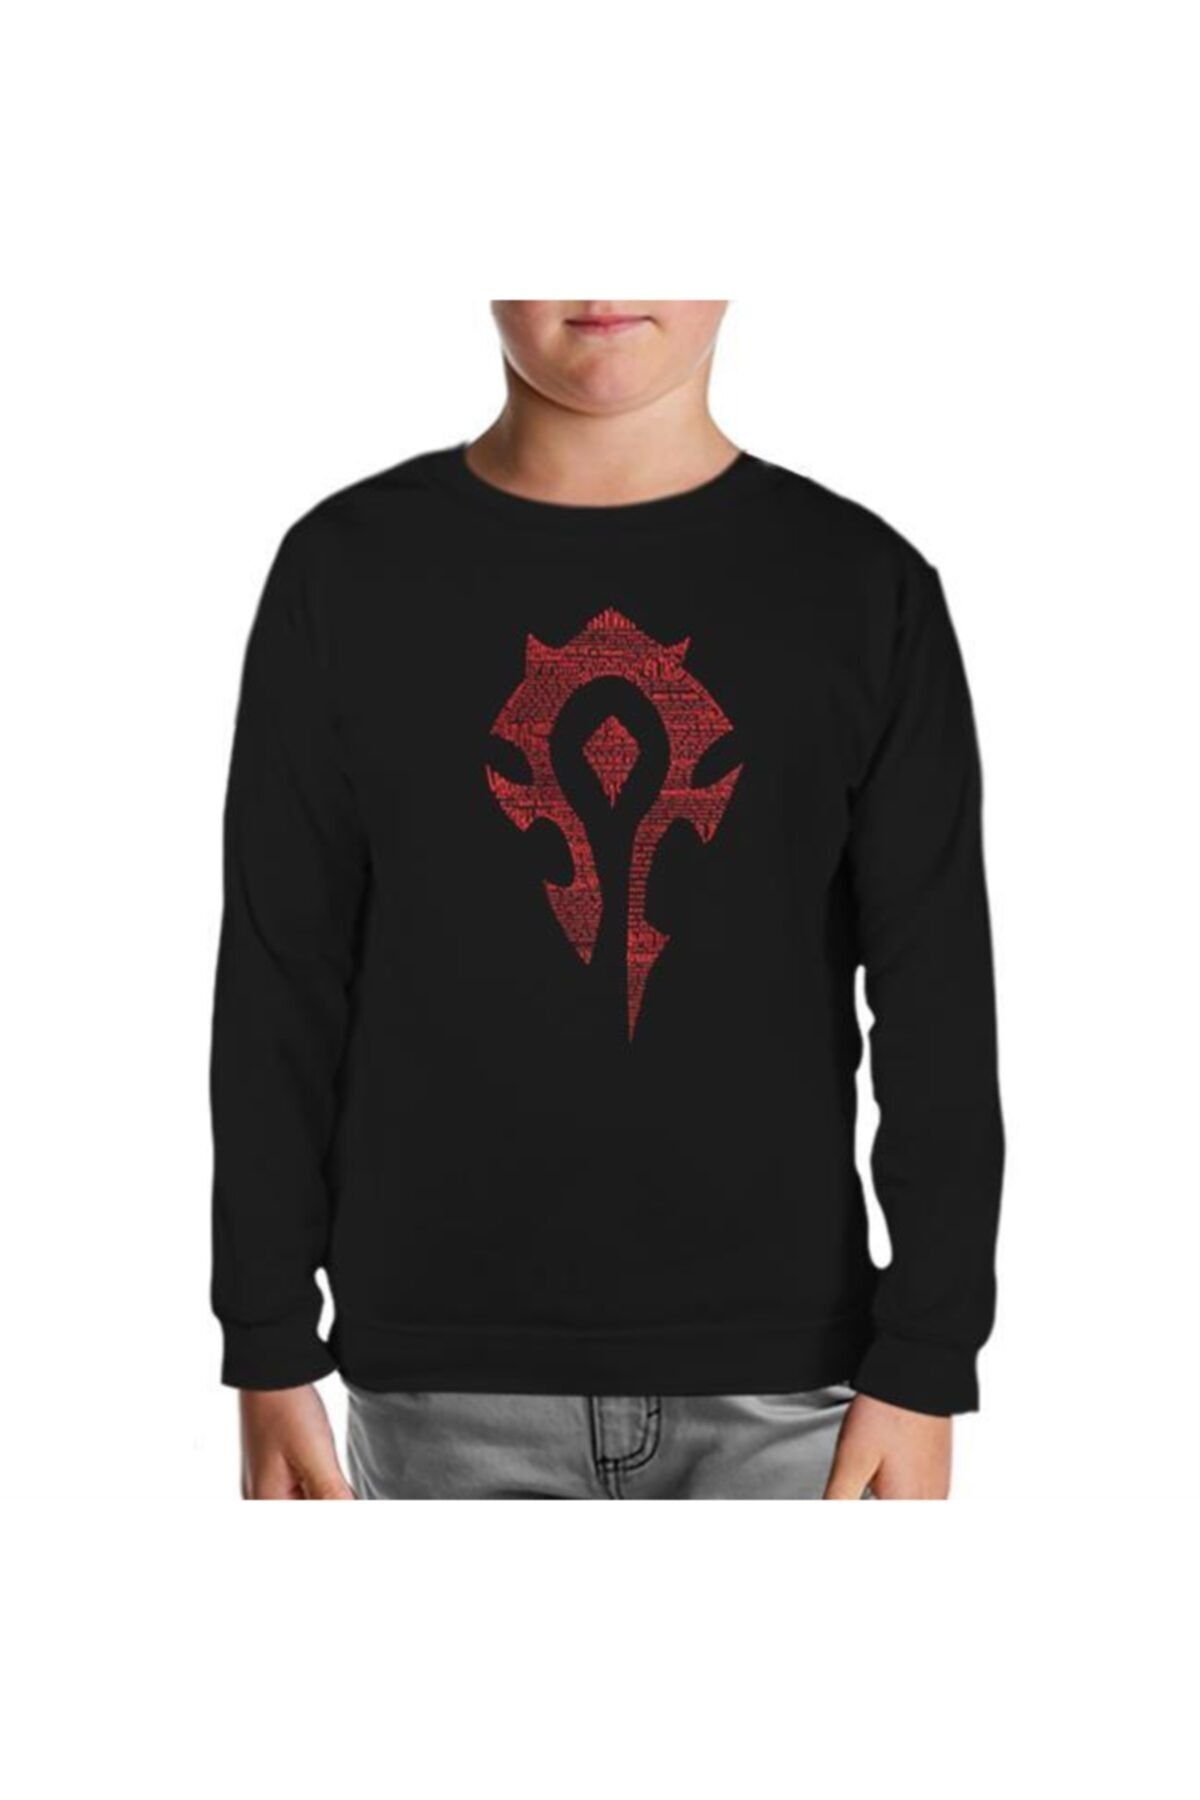 Lord T-Shirt World Of Warcraft - Silver Moon Siyah Çocuk Sweatshirt